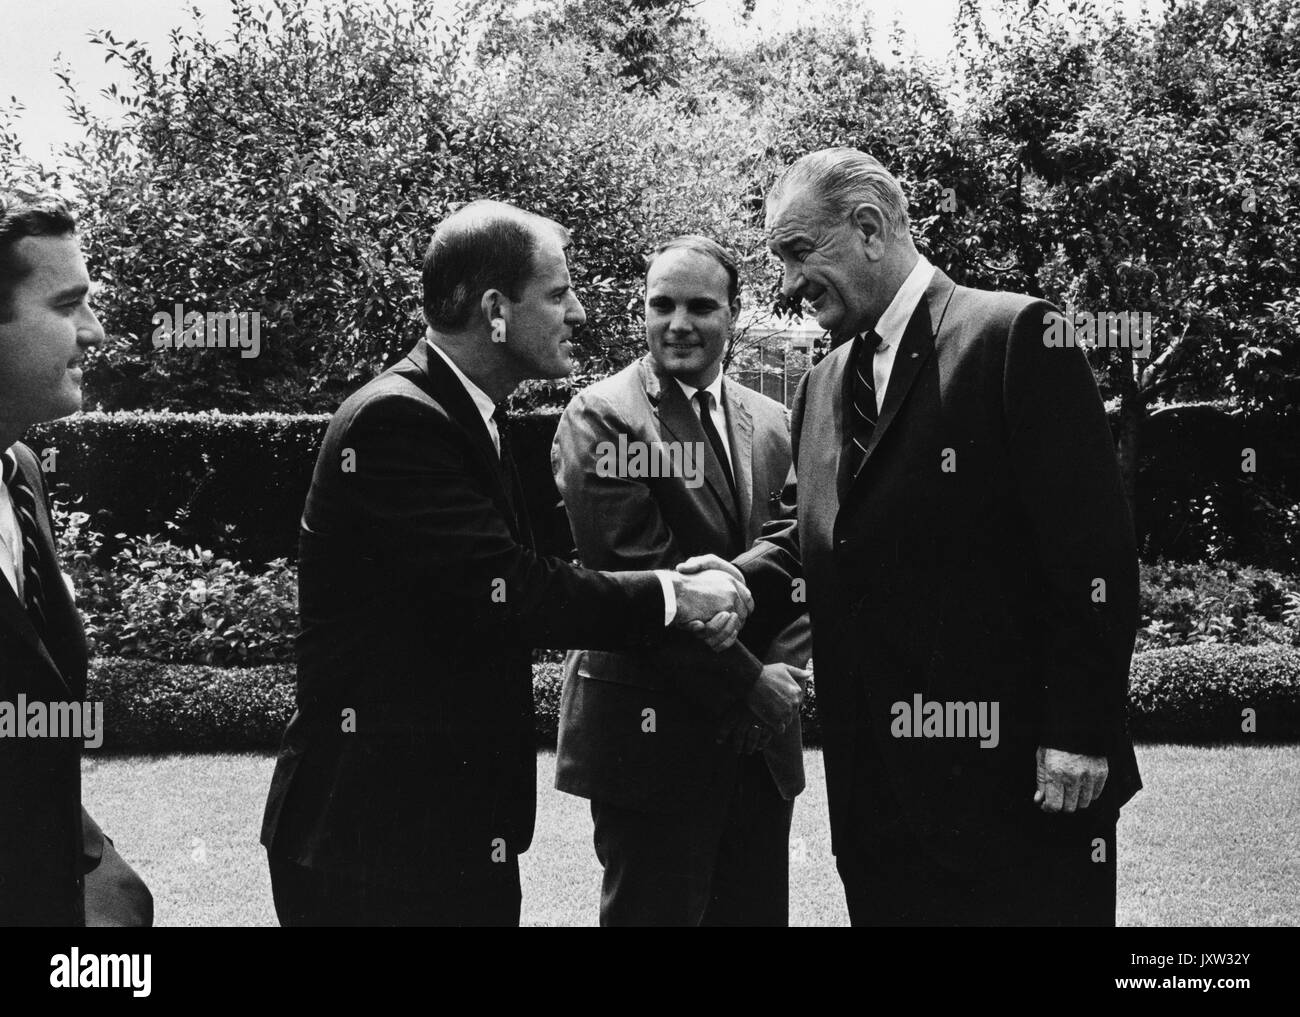 Frank Pierce Linaweaver, Jr, Lyndon Baines Johnson, Candid photograph, Linaweaver shaking hands with Johnson, 1967. Stock Photo